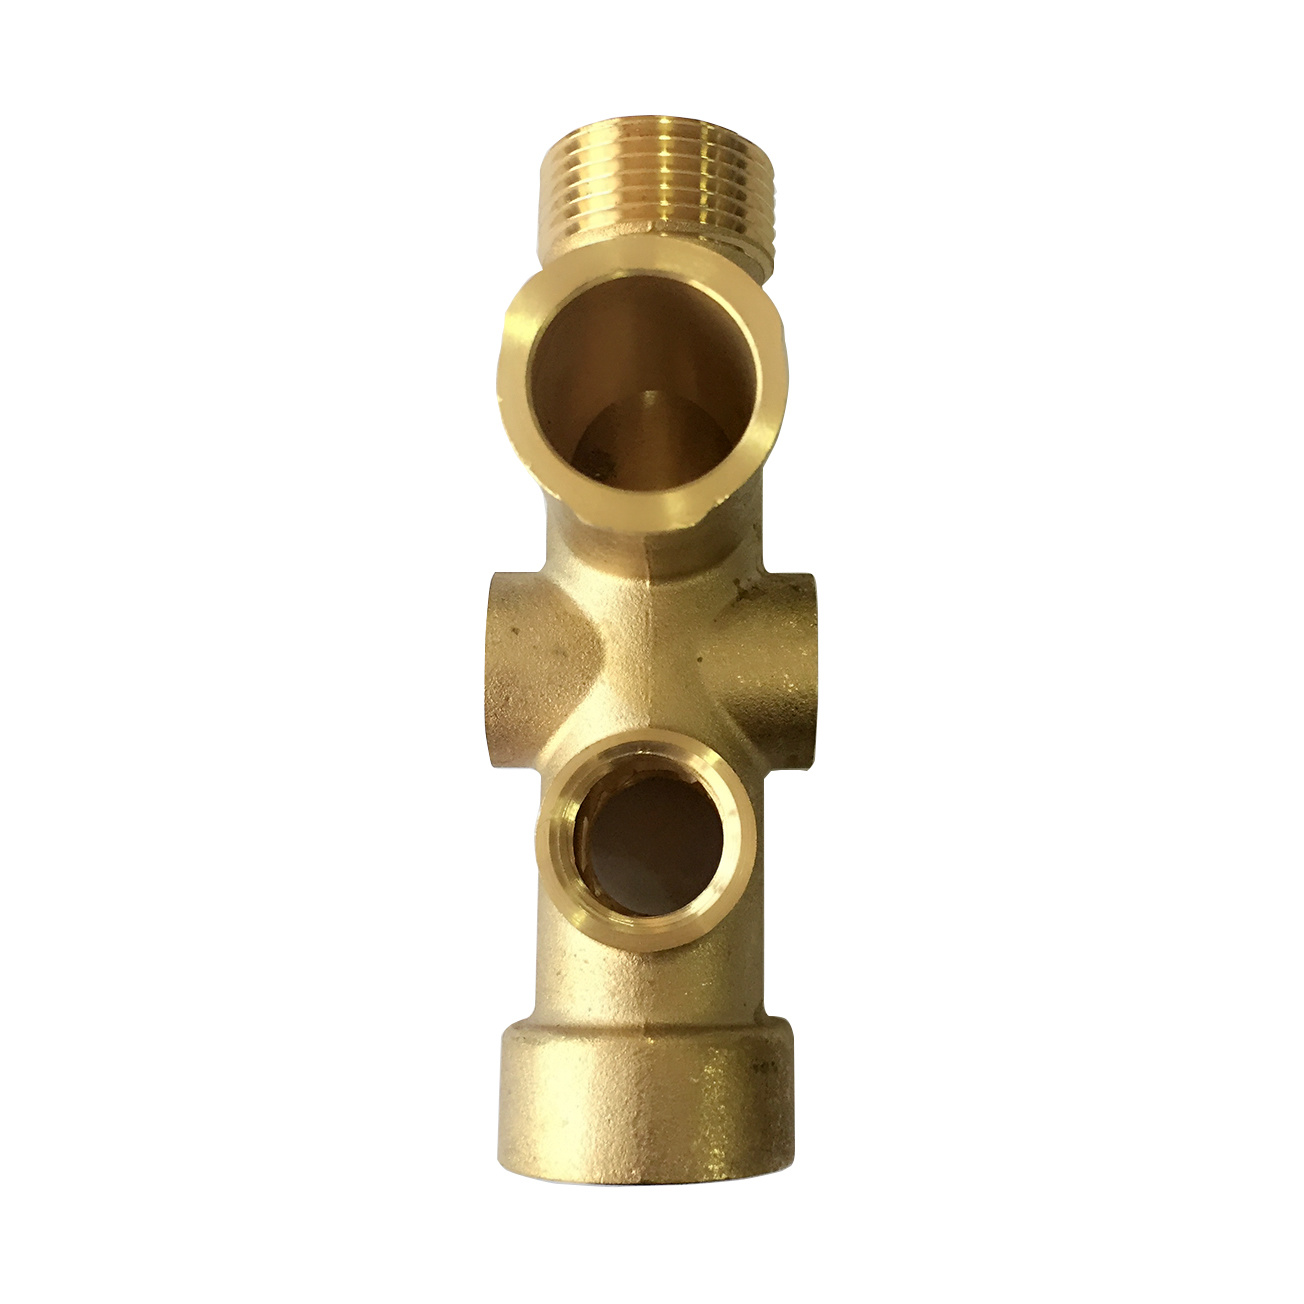 7 Way Brass Beam with Union for Underfloor Heating Brass Manifold System